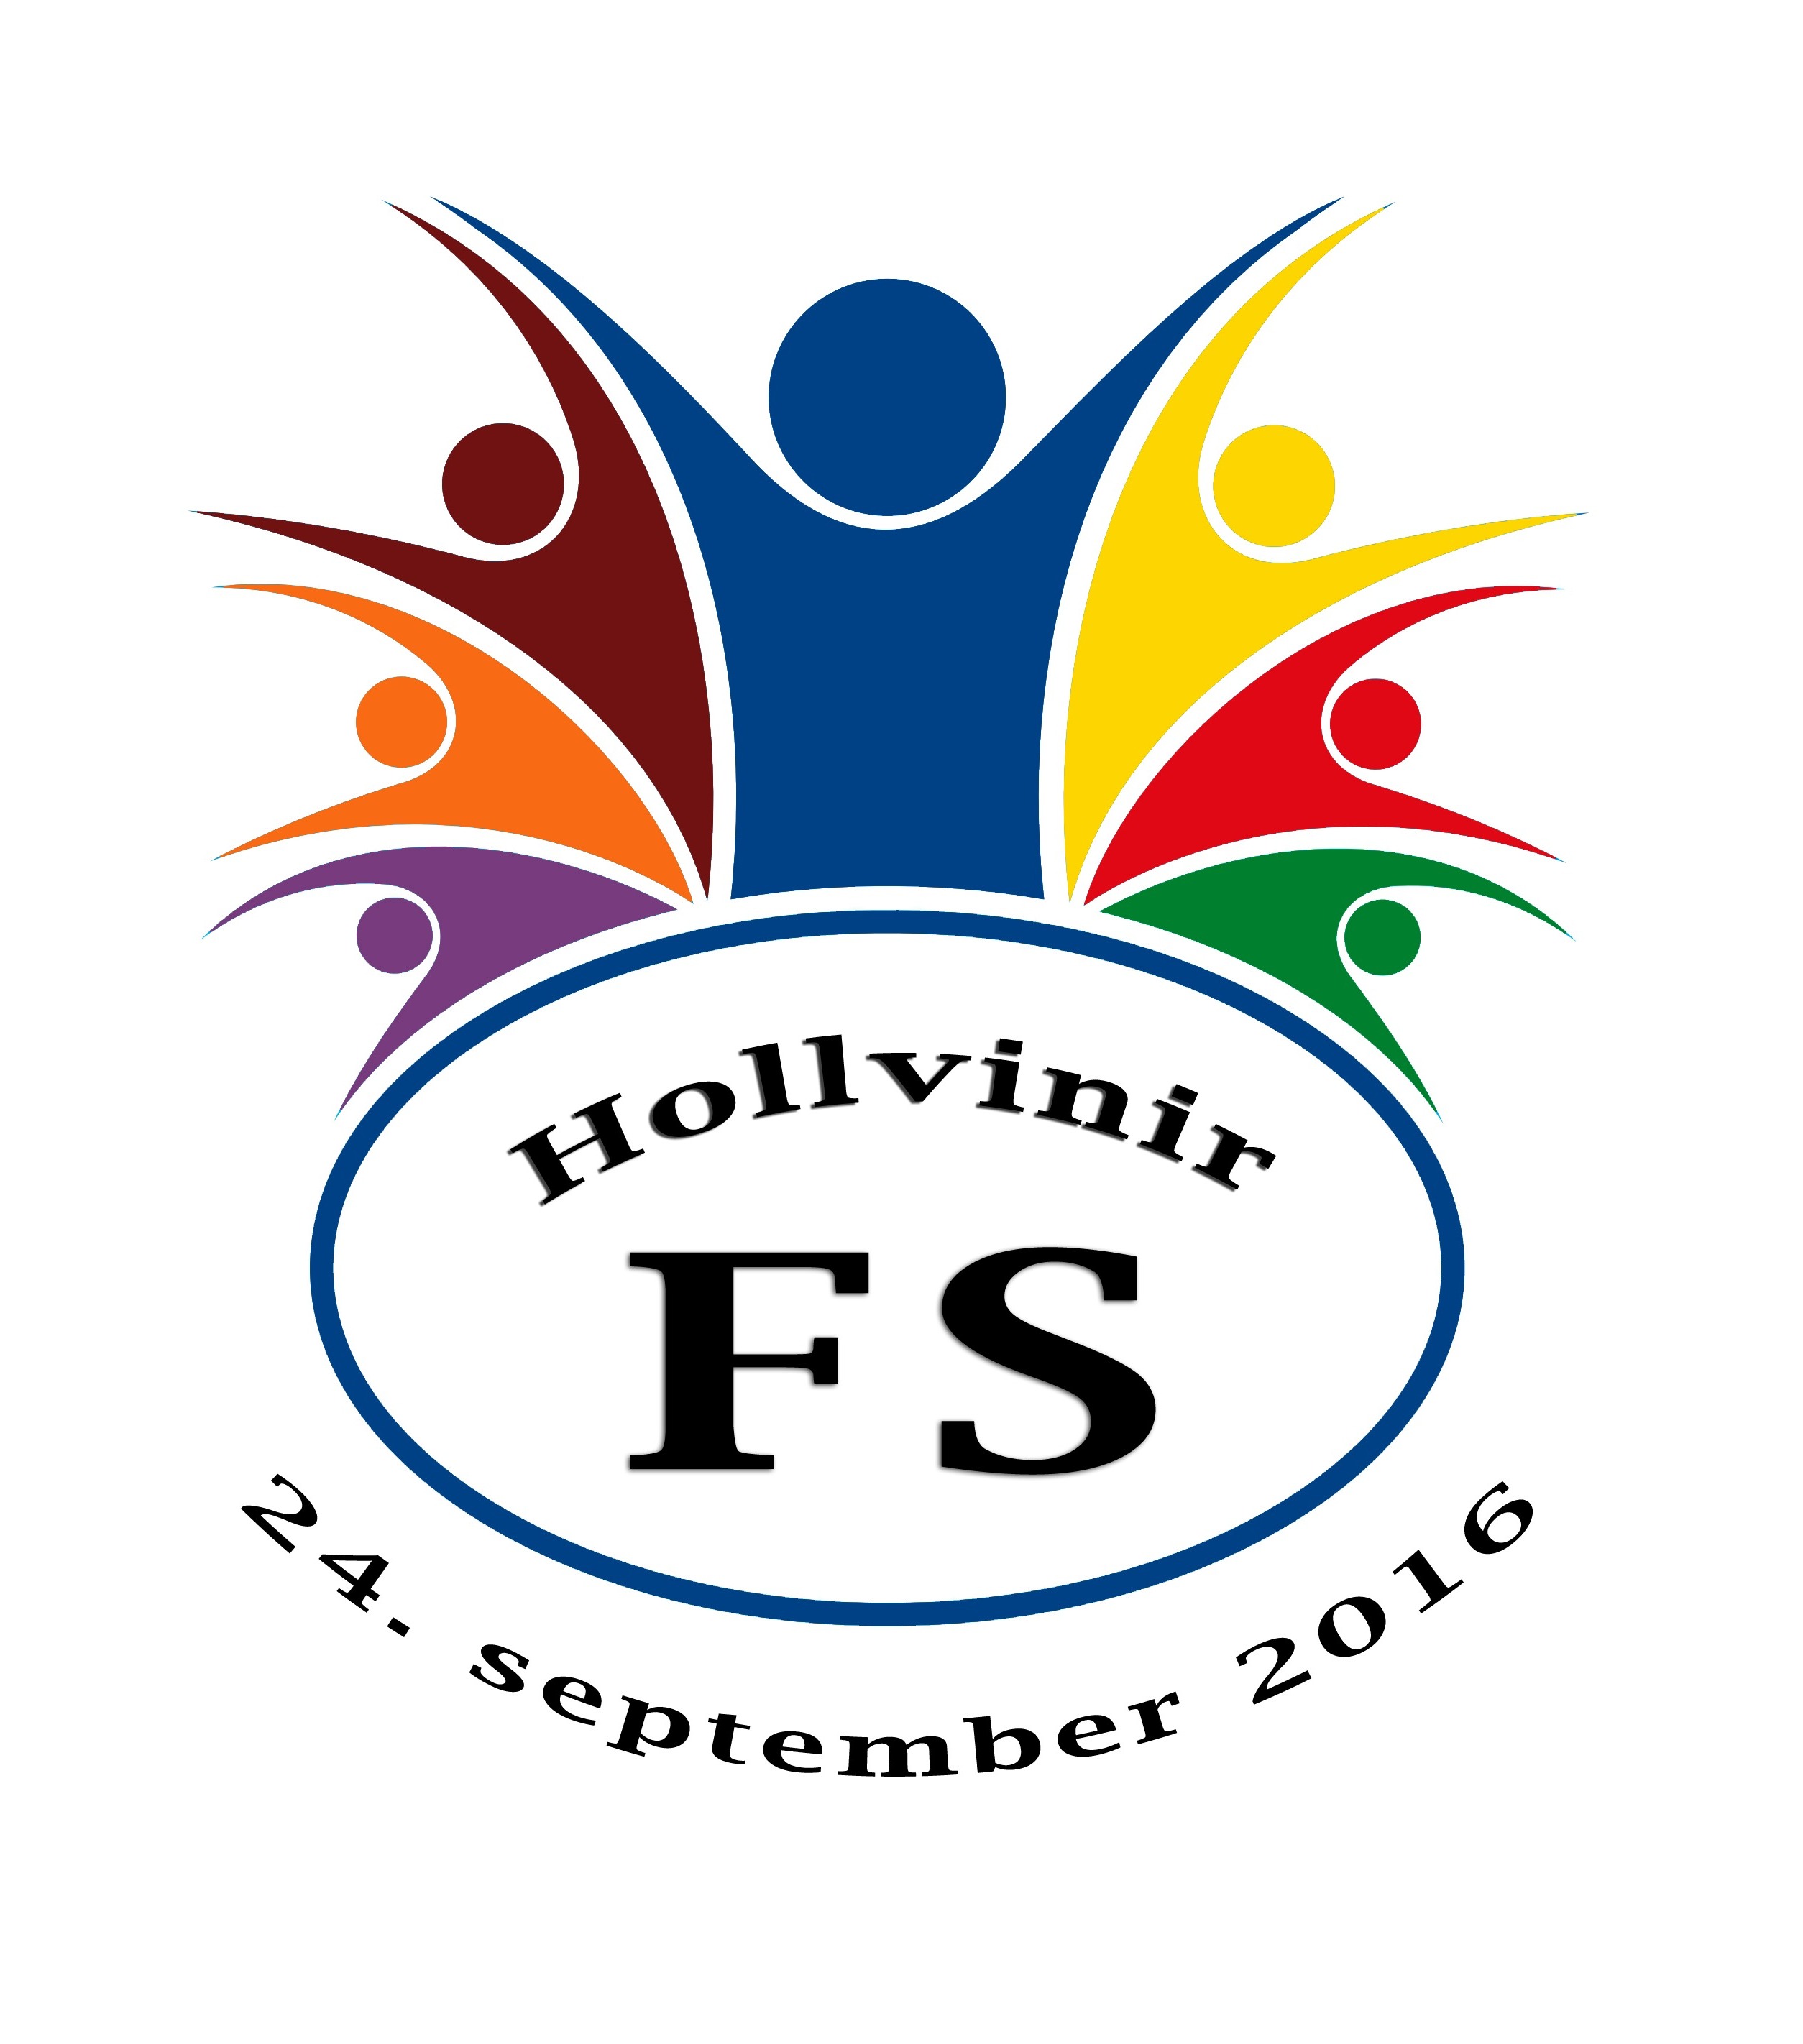 Hollvinir FS 2016